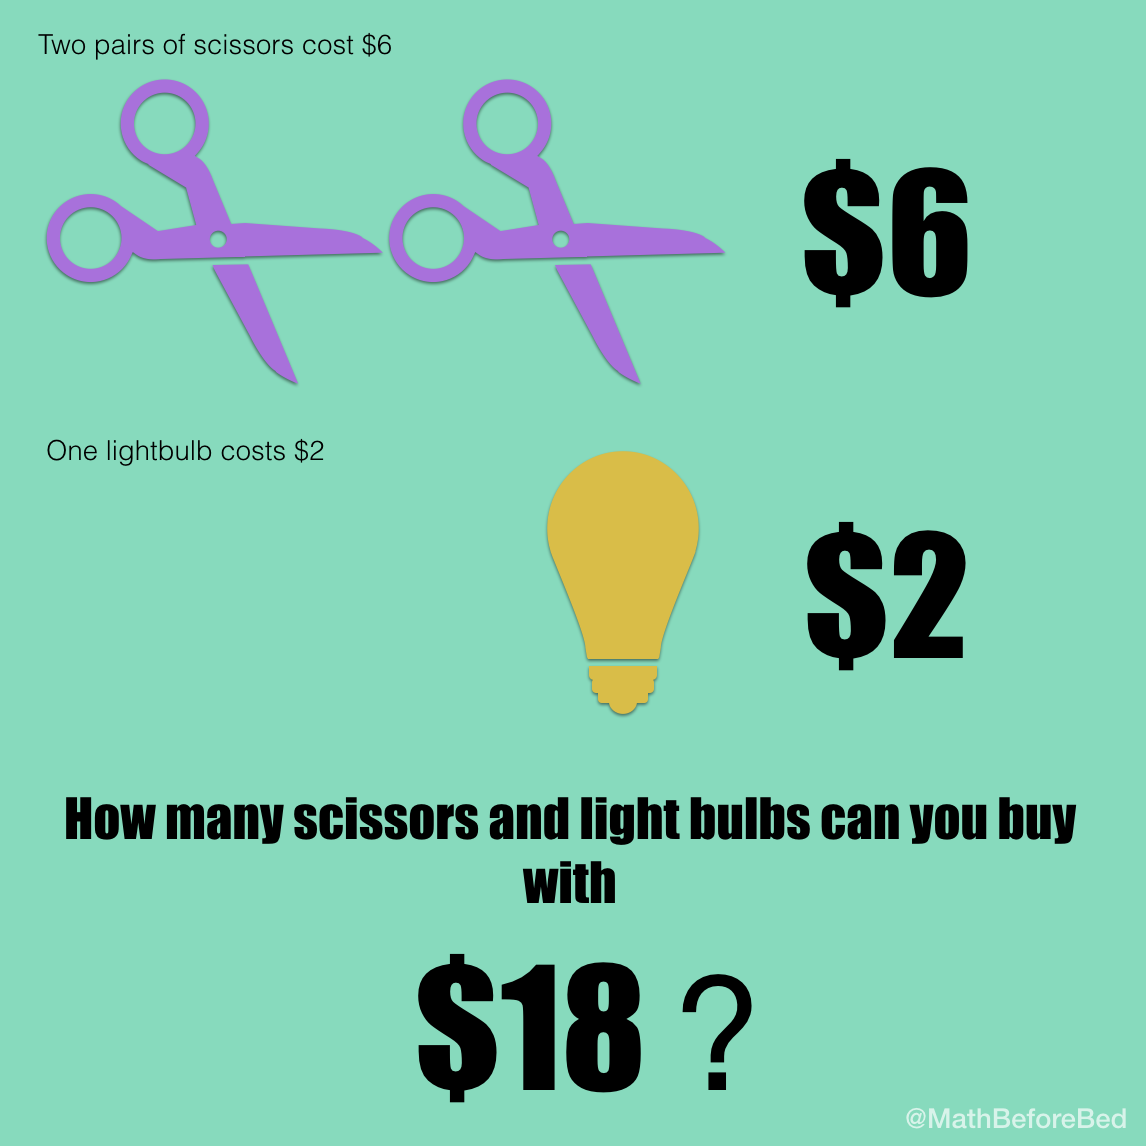 Bulbs and Scissors